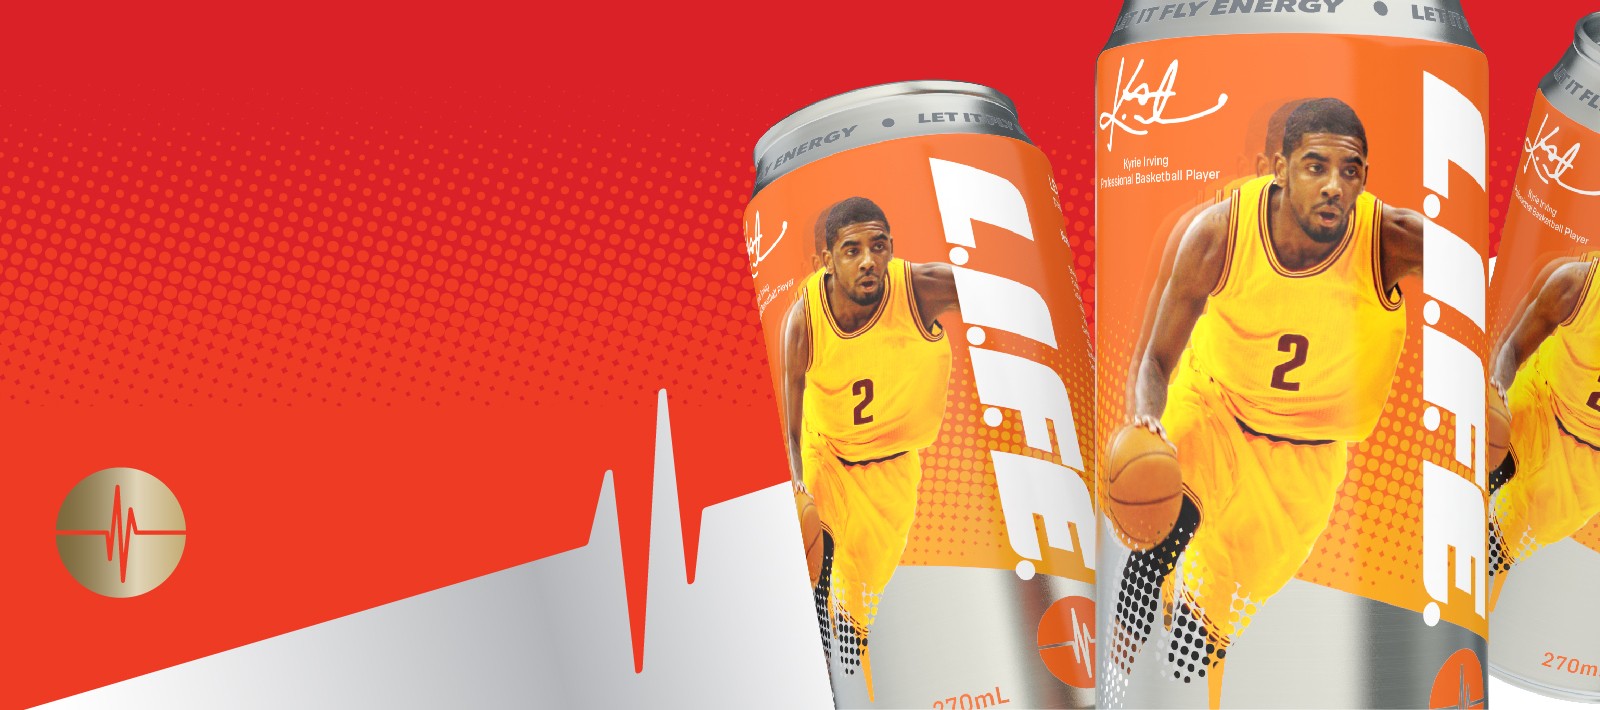 Beverage brand identity design for energy drink